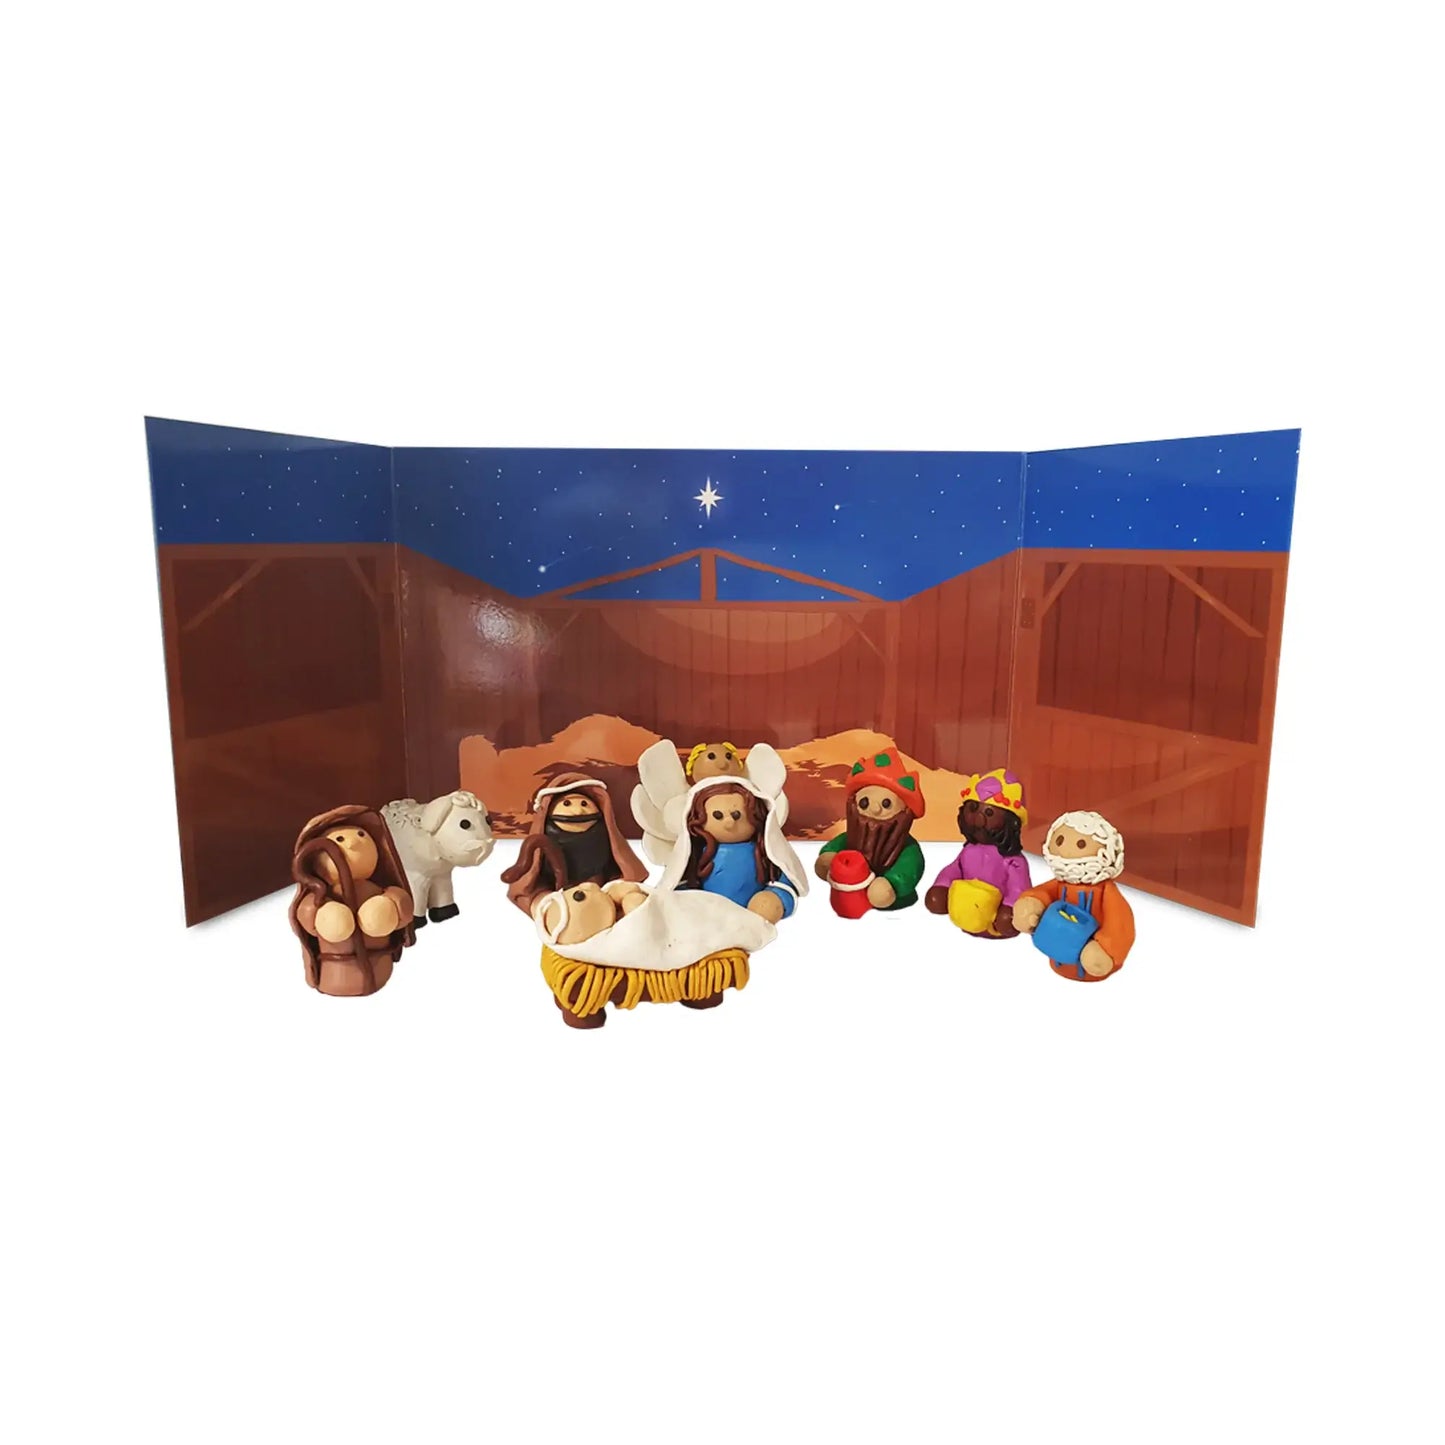 Plasticine Model Your Own Nativity Scene